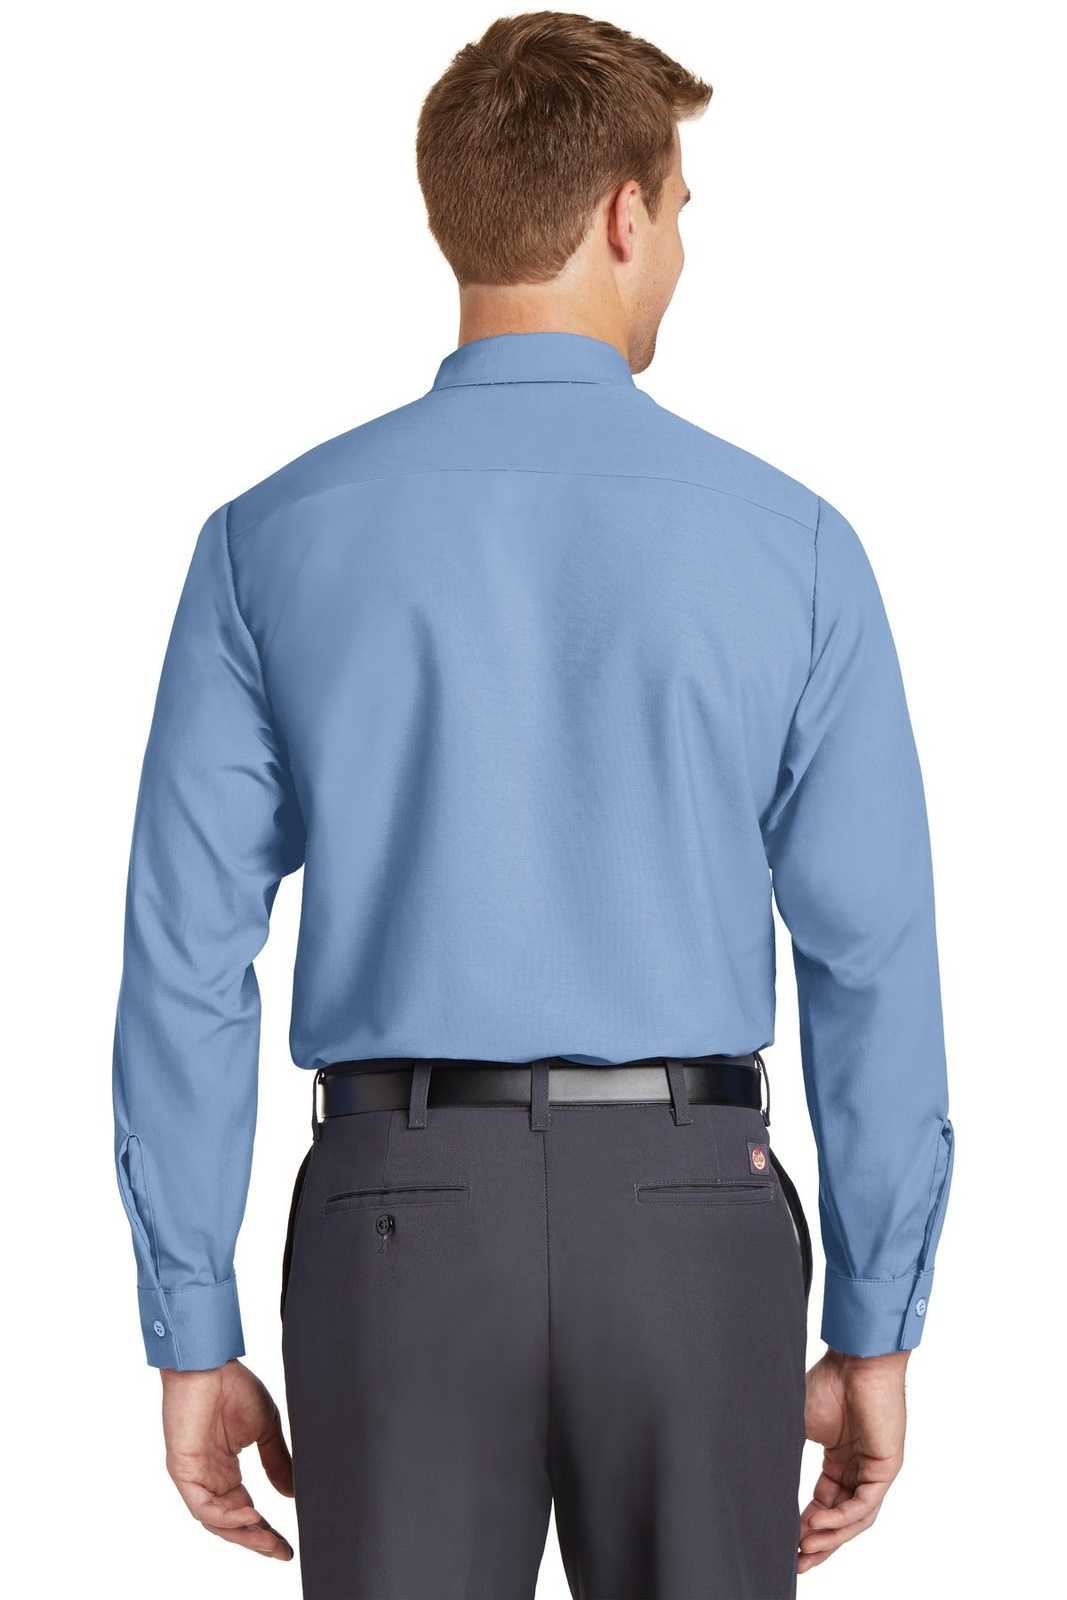 Red Kap SP14 Long Sleeve Industrial Work Shirt - Petrol Blue - HIT a Double - 2